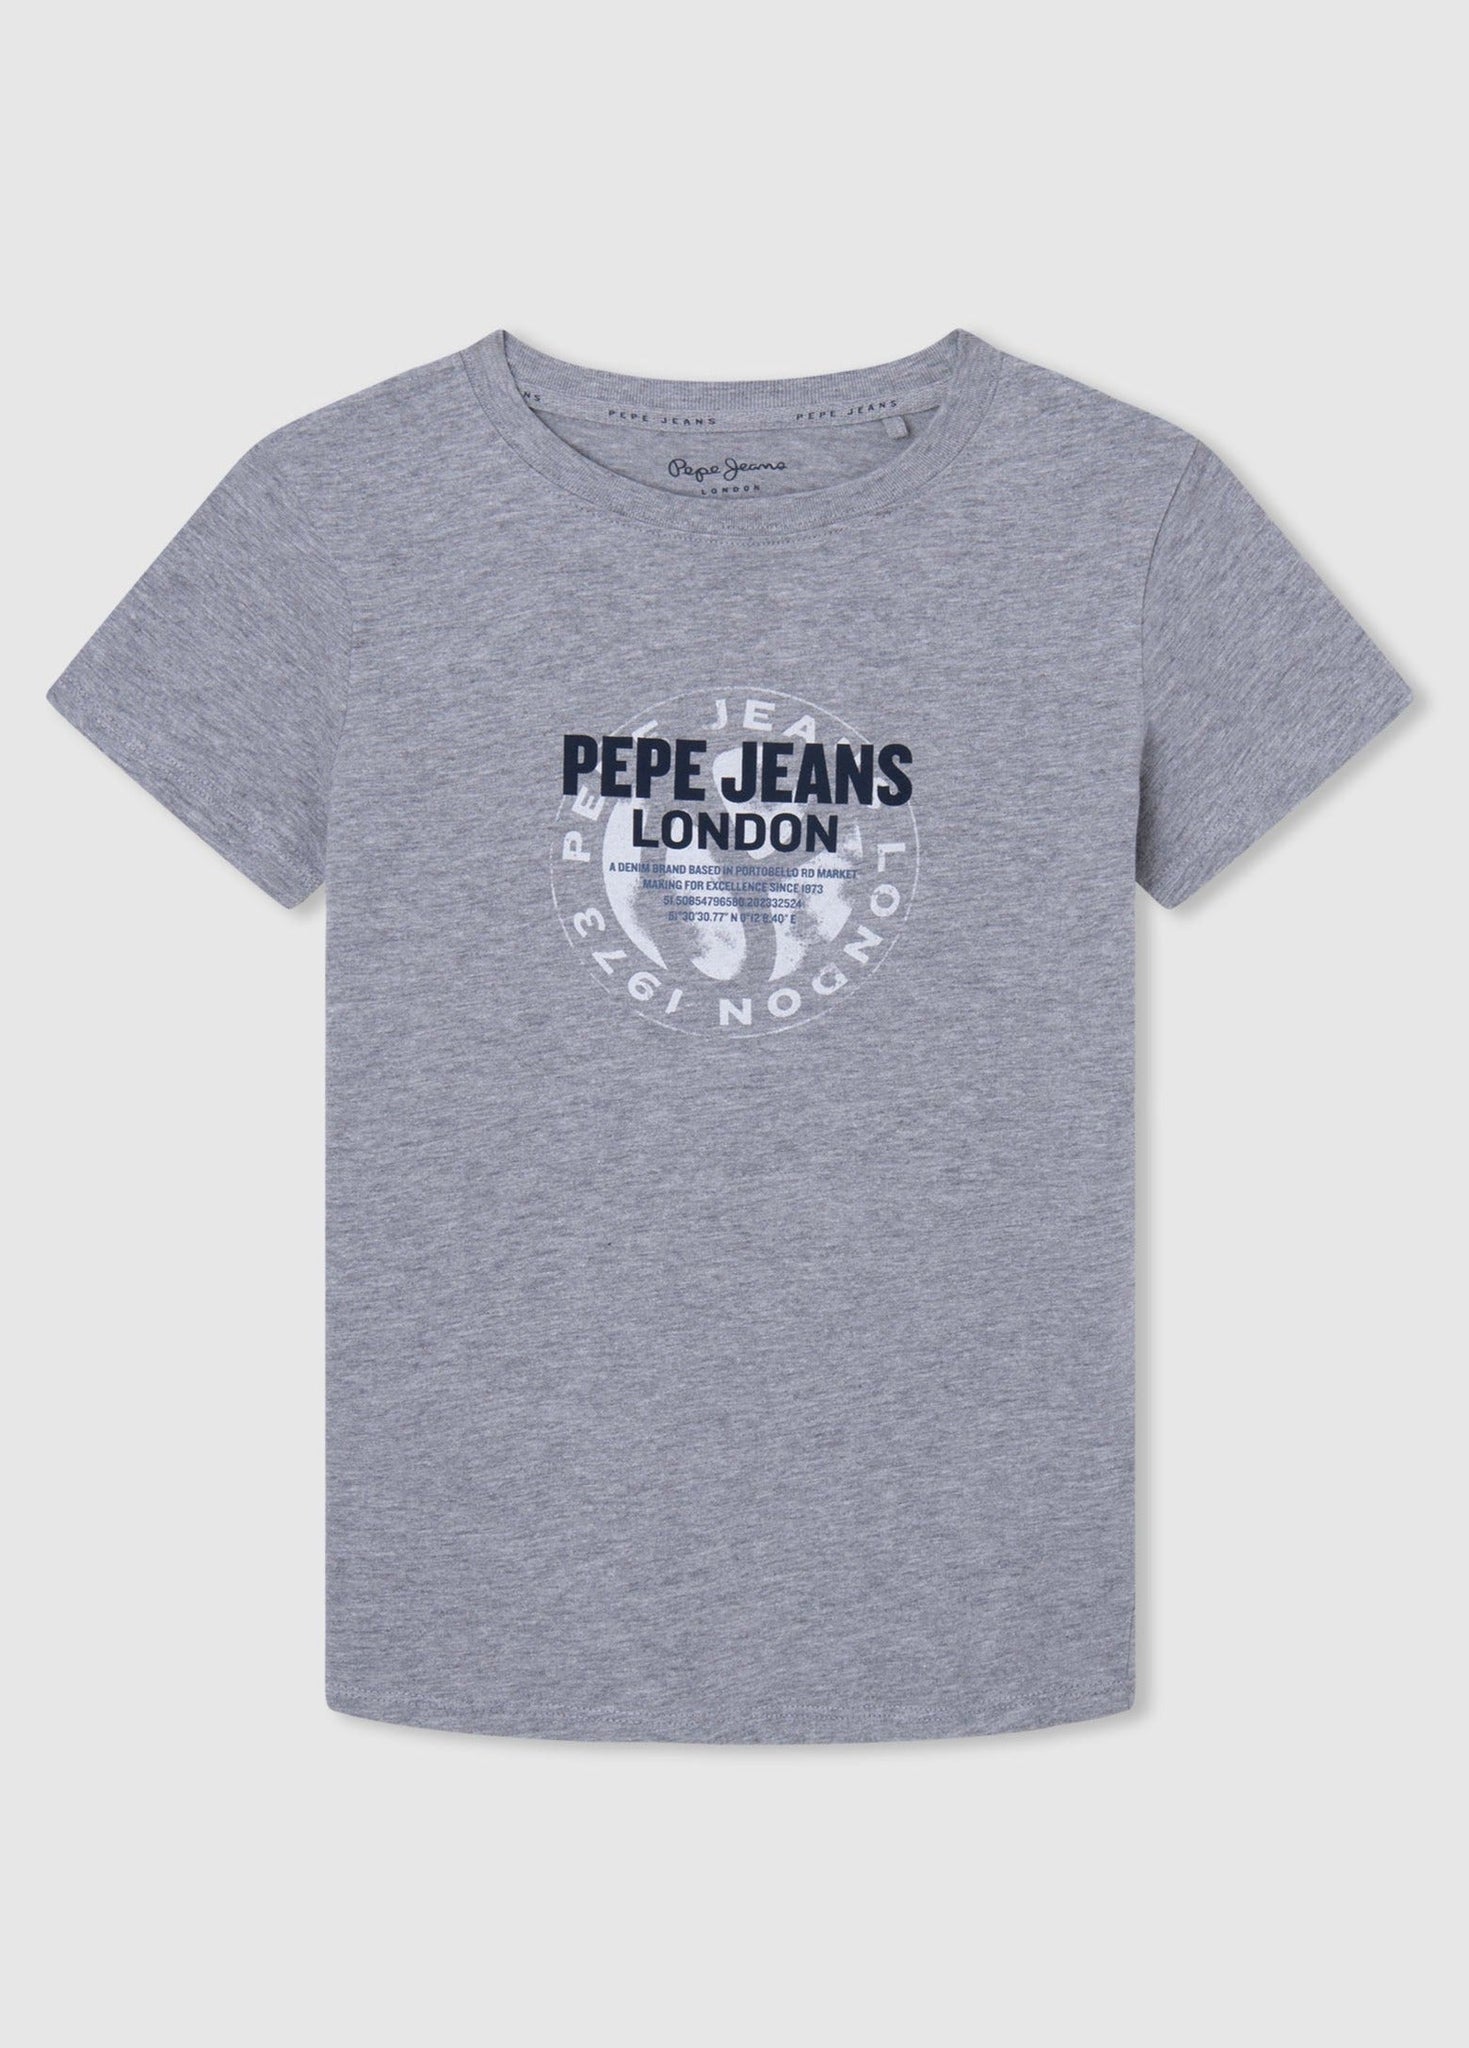 Pepe Jeans PB503524-933 Koszulka BROOKLYN chłopak kolor szary